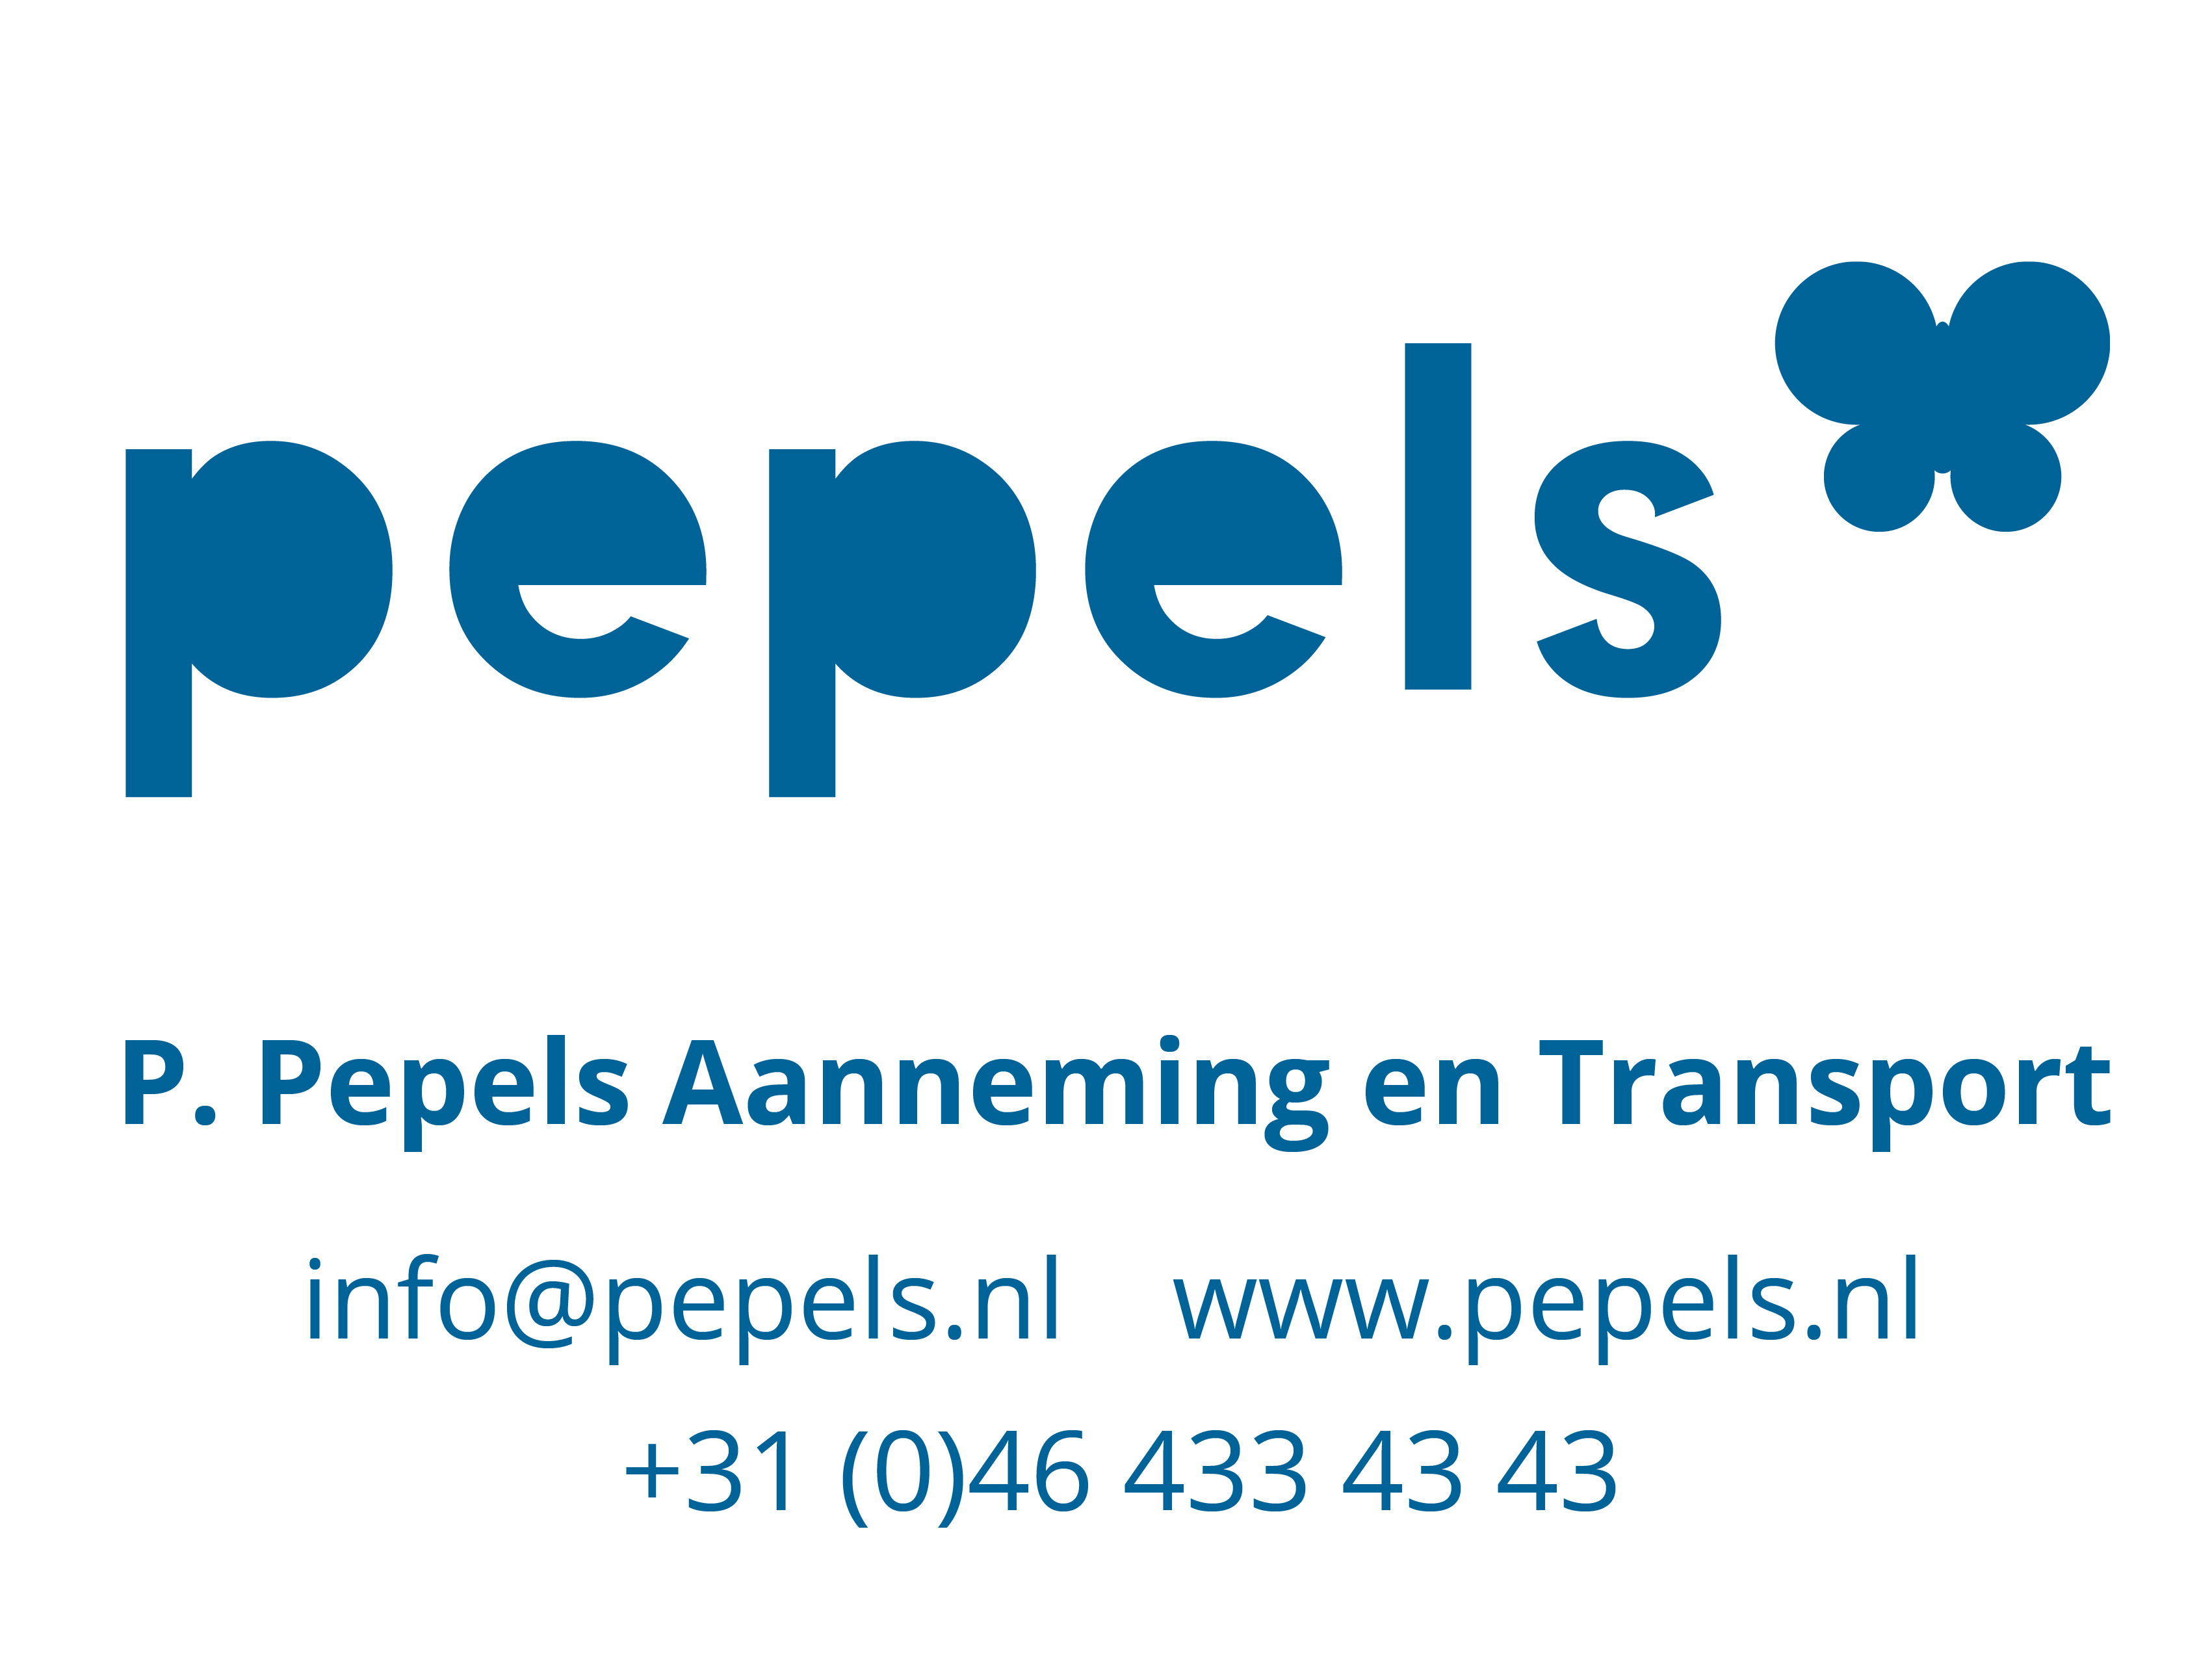 http://www.pepels.nl/